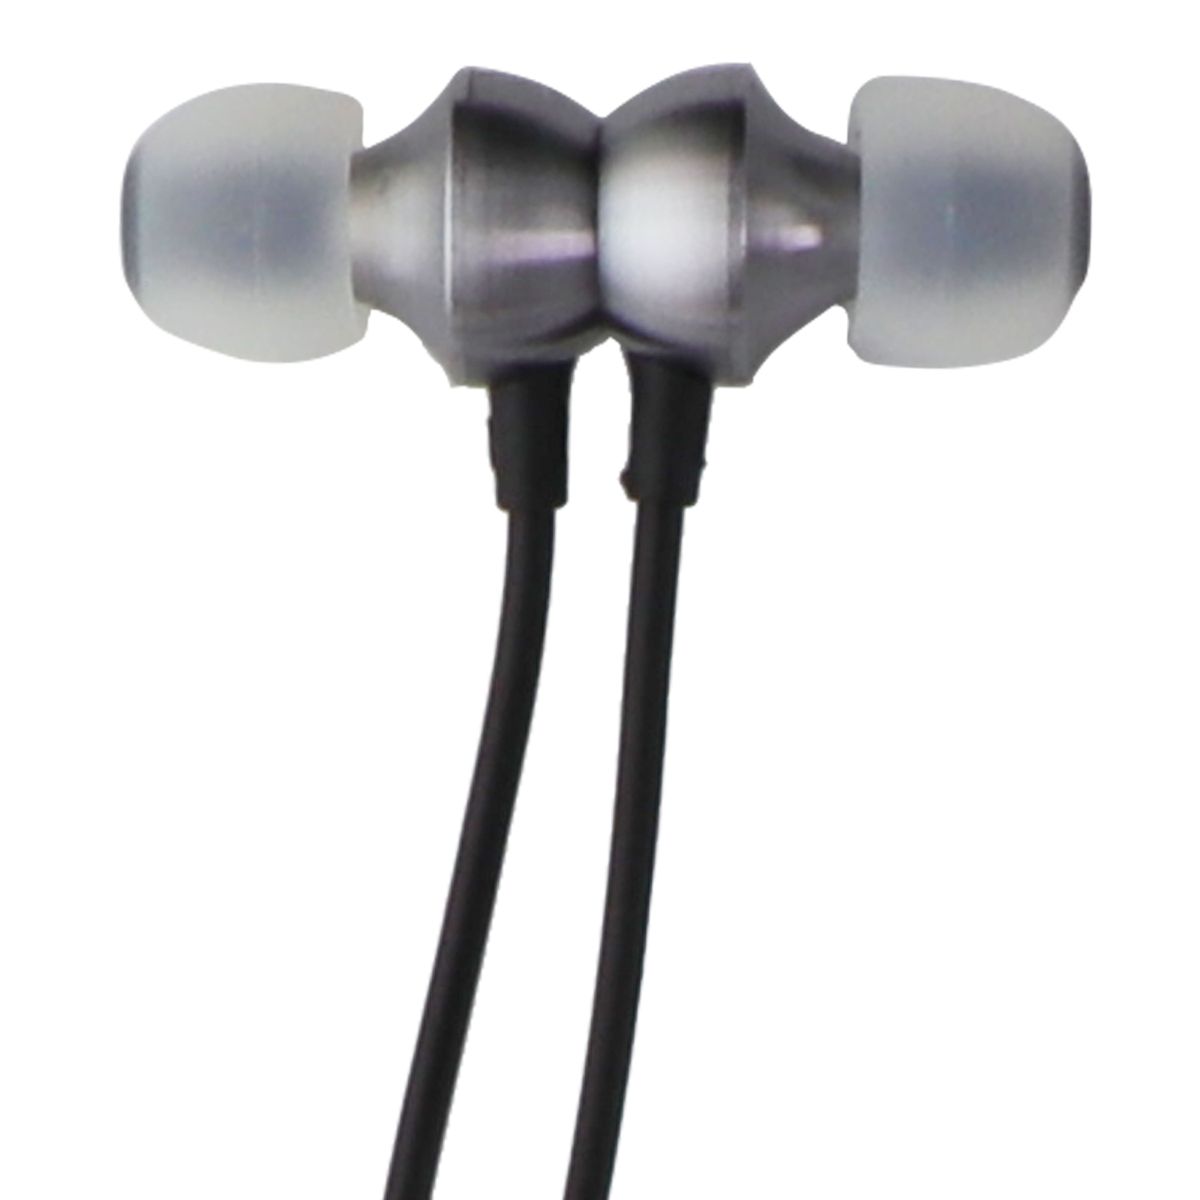 RHA MA650 Wireless Sweat-Proof Bluetooth in-Ear Headphones - Silver/Black Portable Audio - Headphones RHA    - Simple Cell Bulk Wholesale Pricing - USA Seller